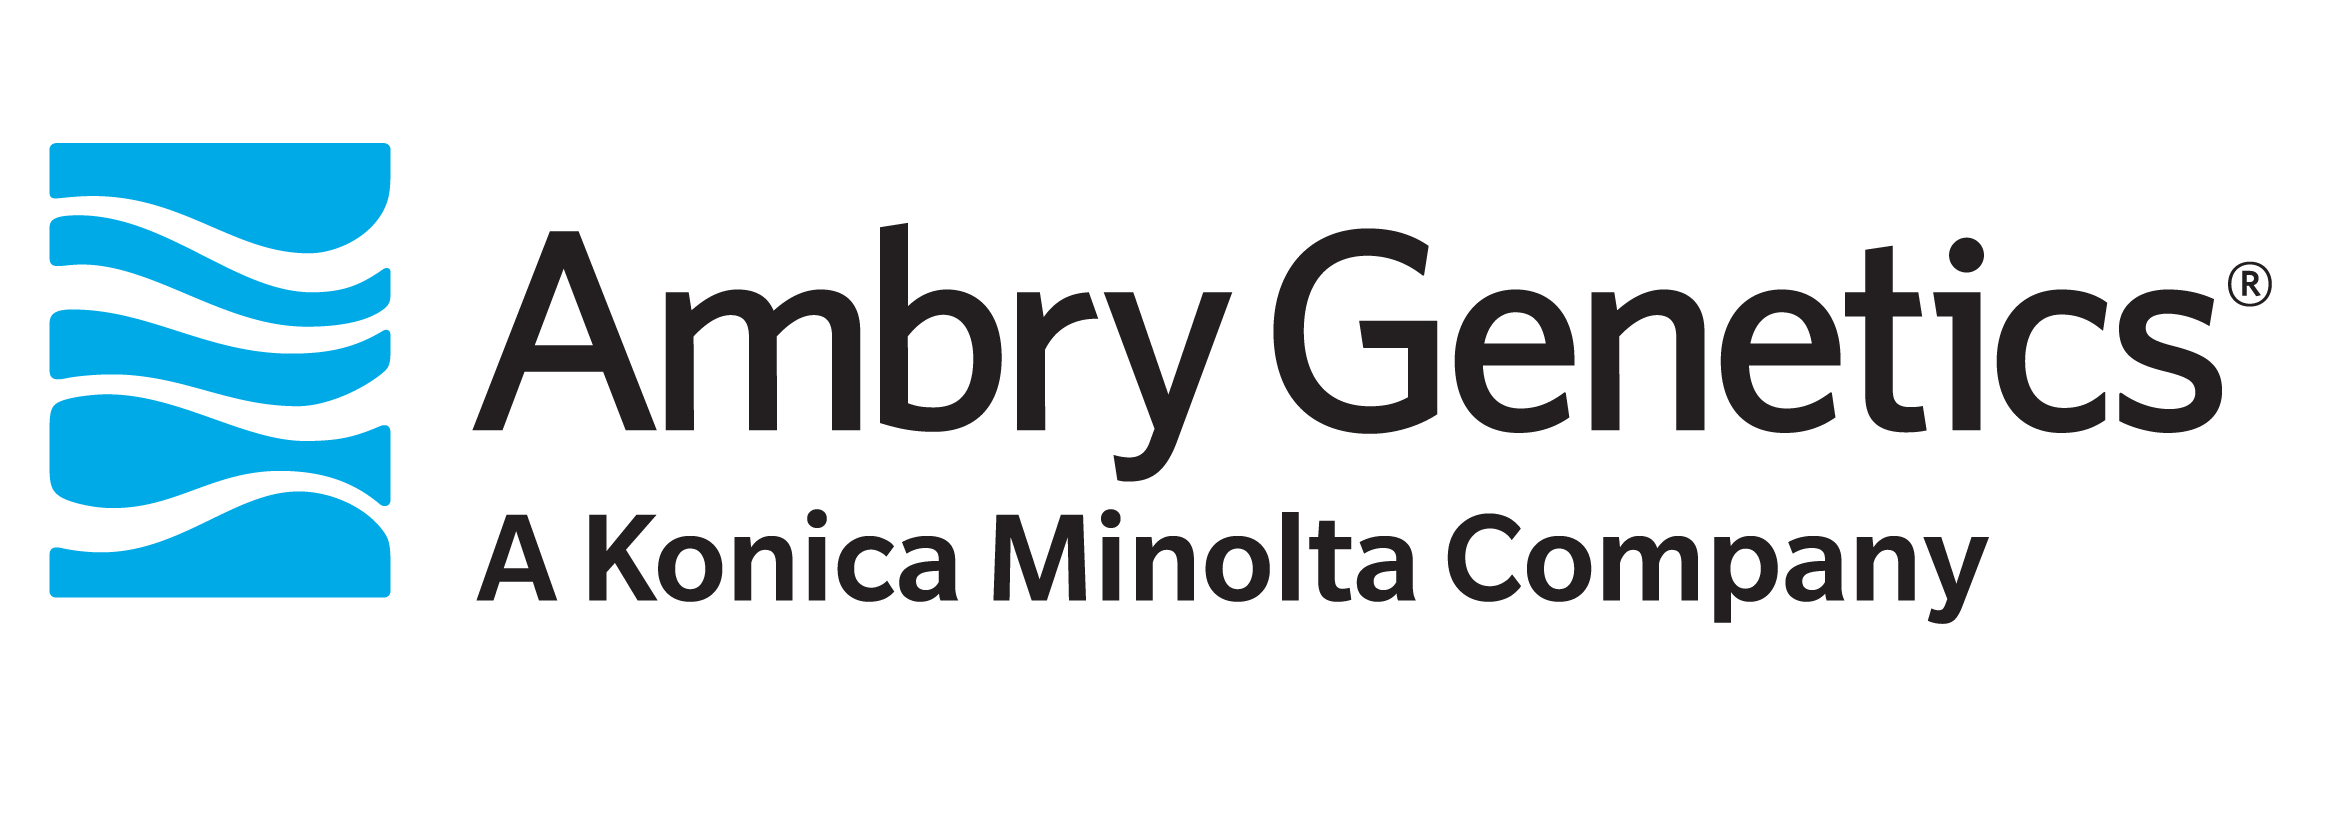 Ambry Genetics Logo